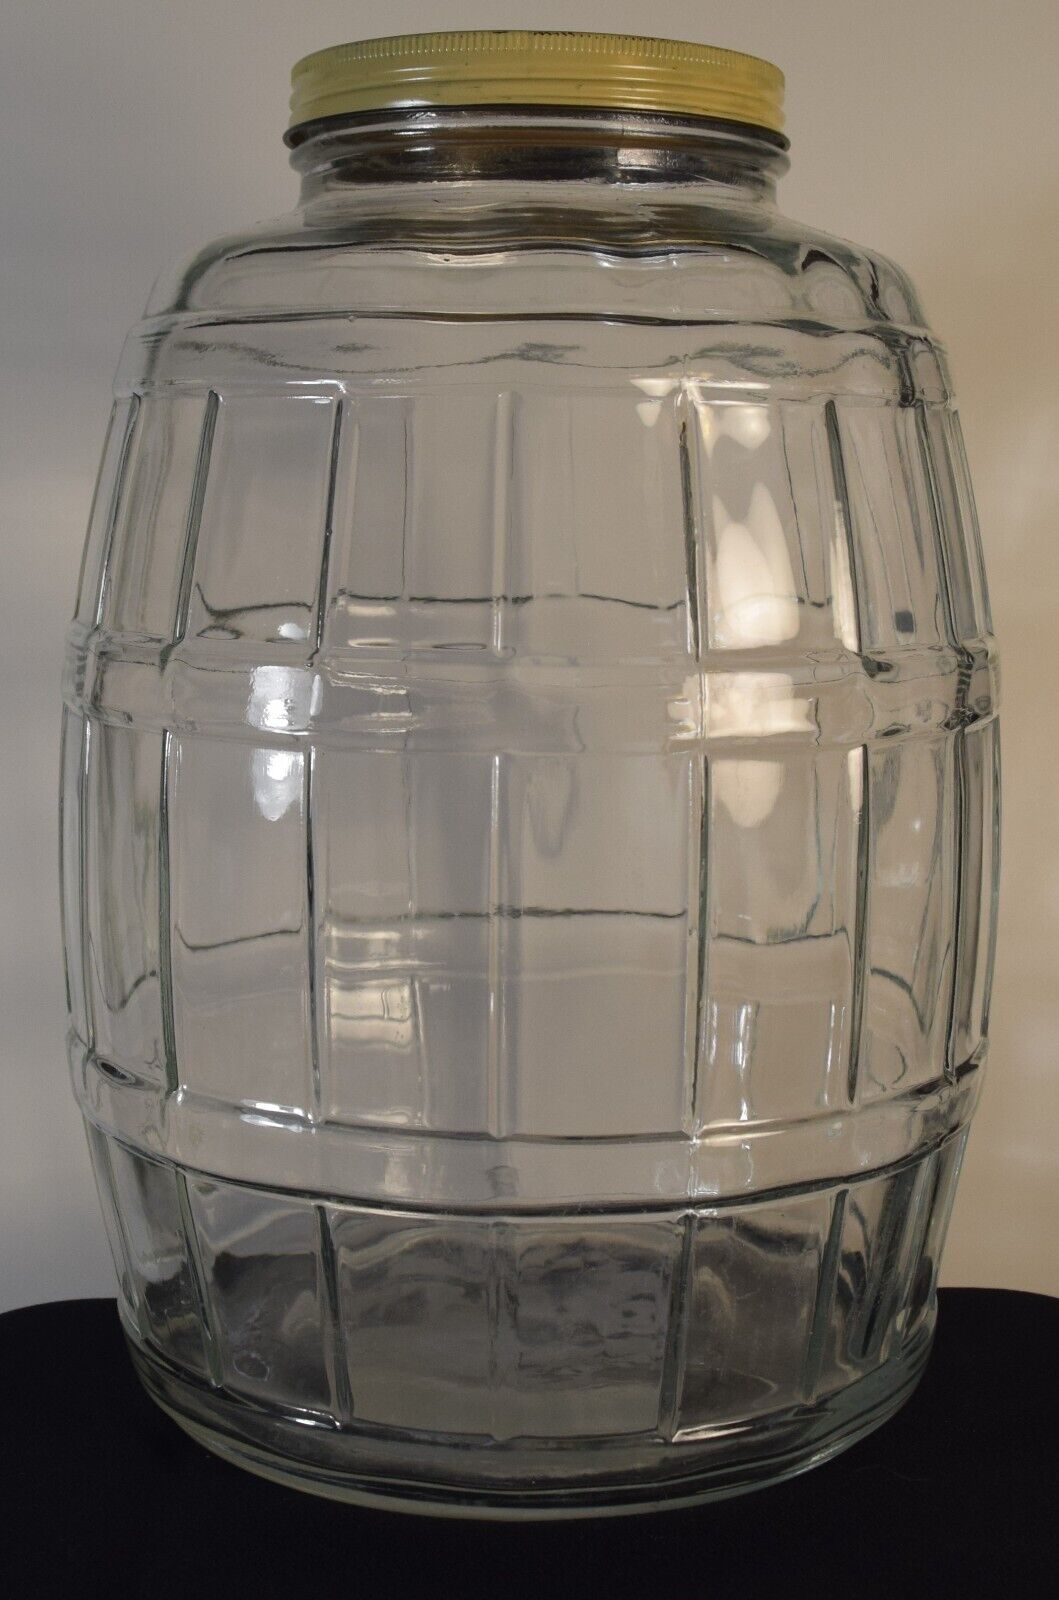 Large Vintage Clear Glass Pickle Jar Keg Barrel Style With Metal Lid 2.5 Gallon